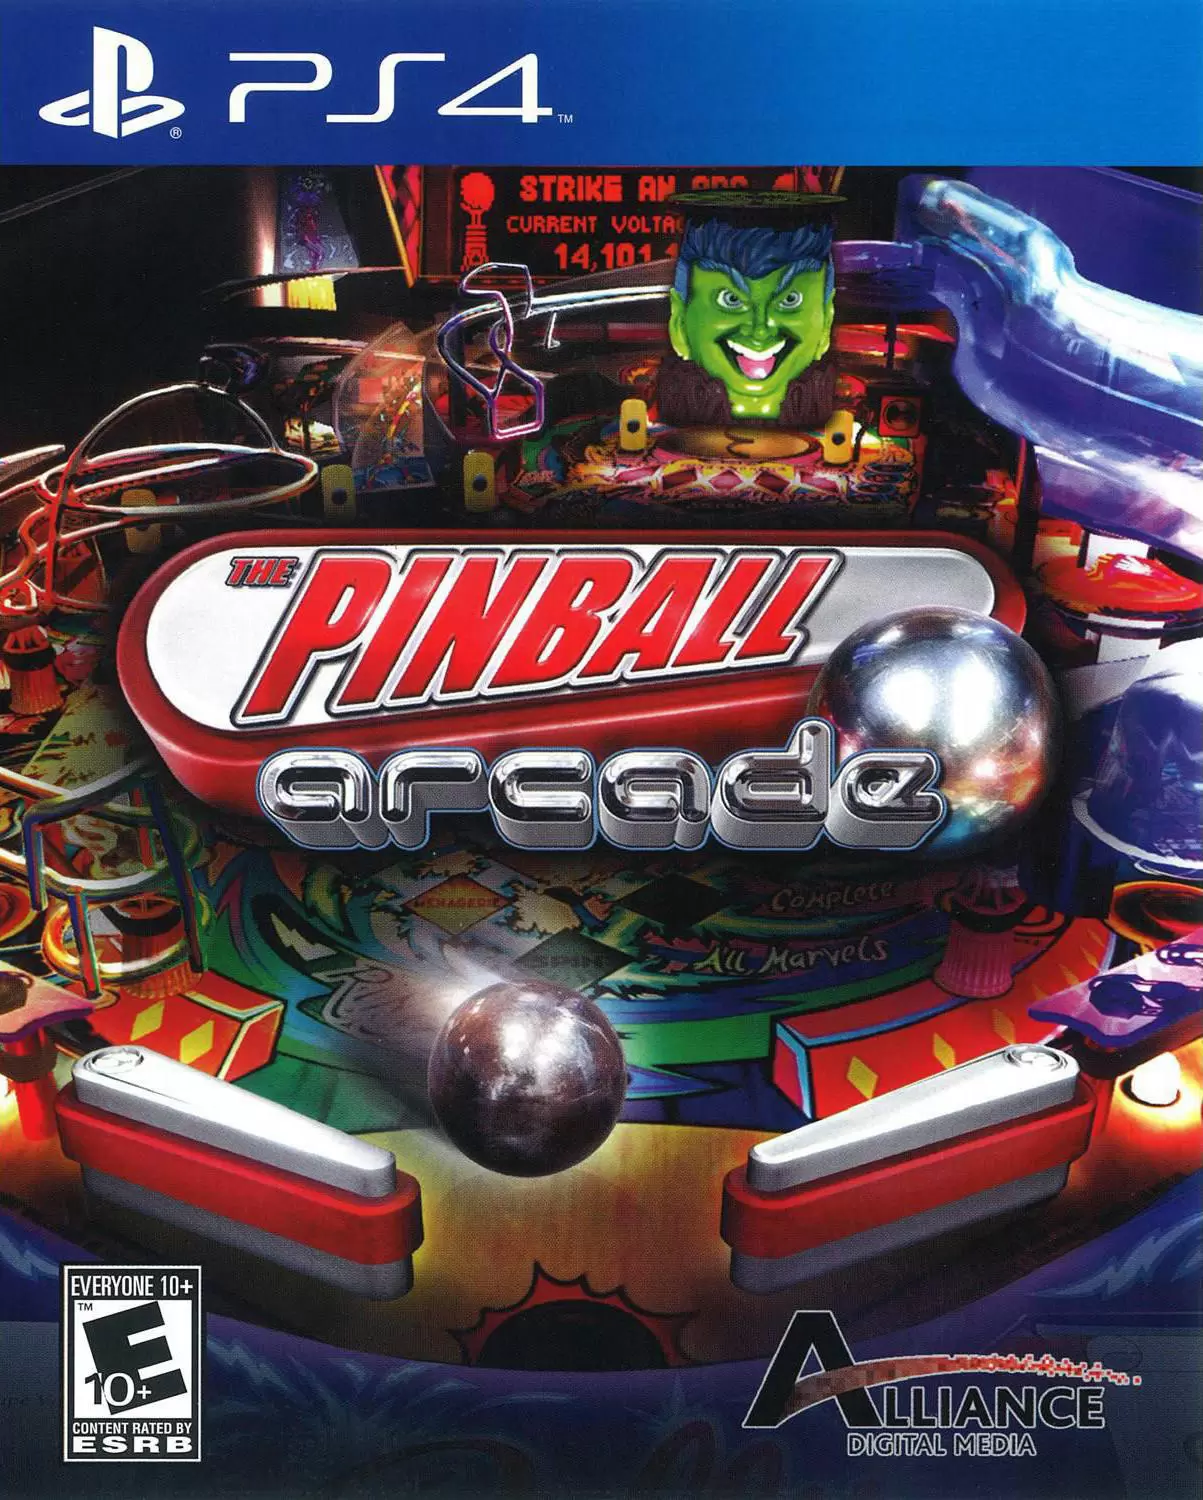 PS4 Games - The Pinball Arcade